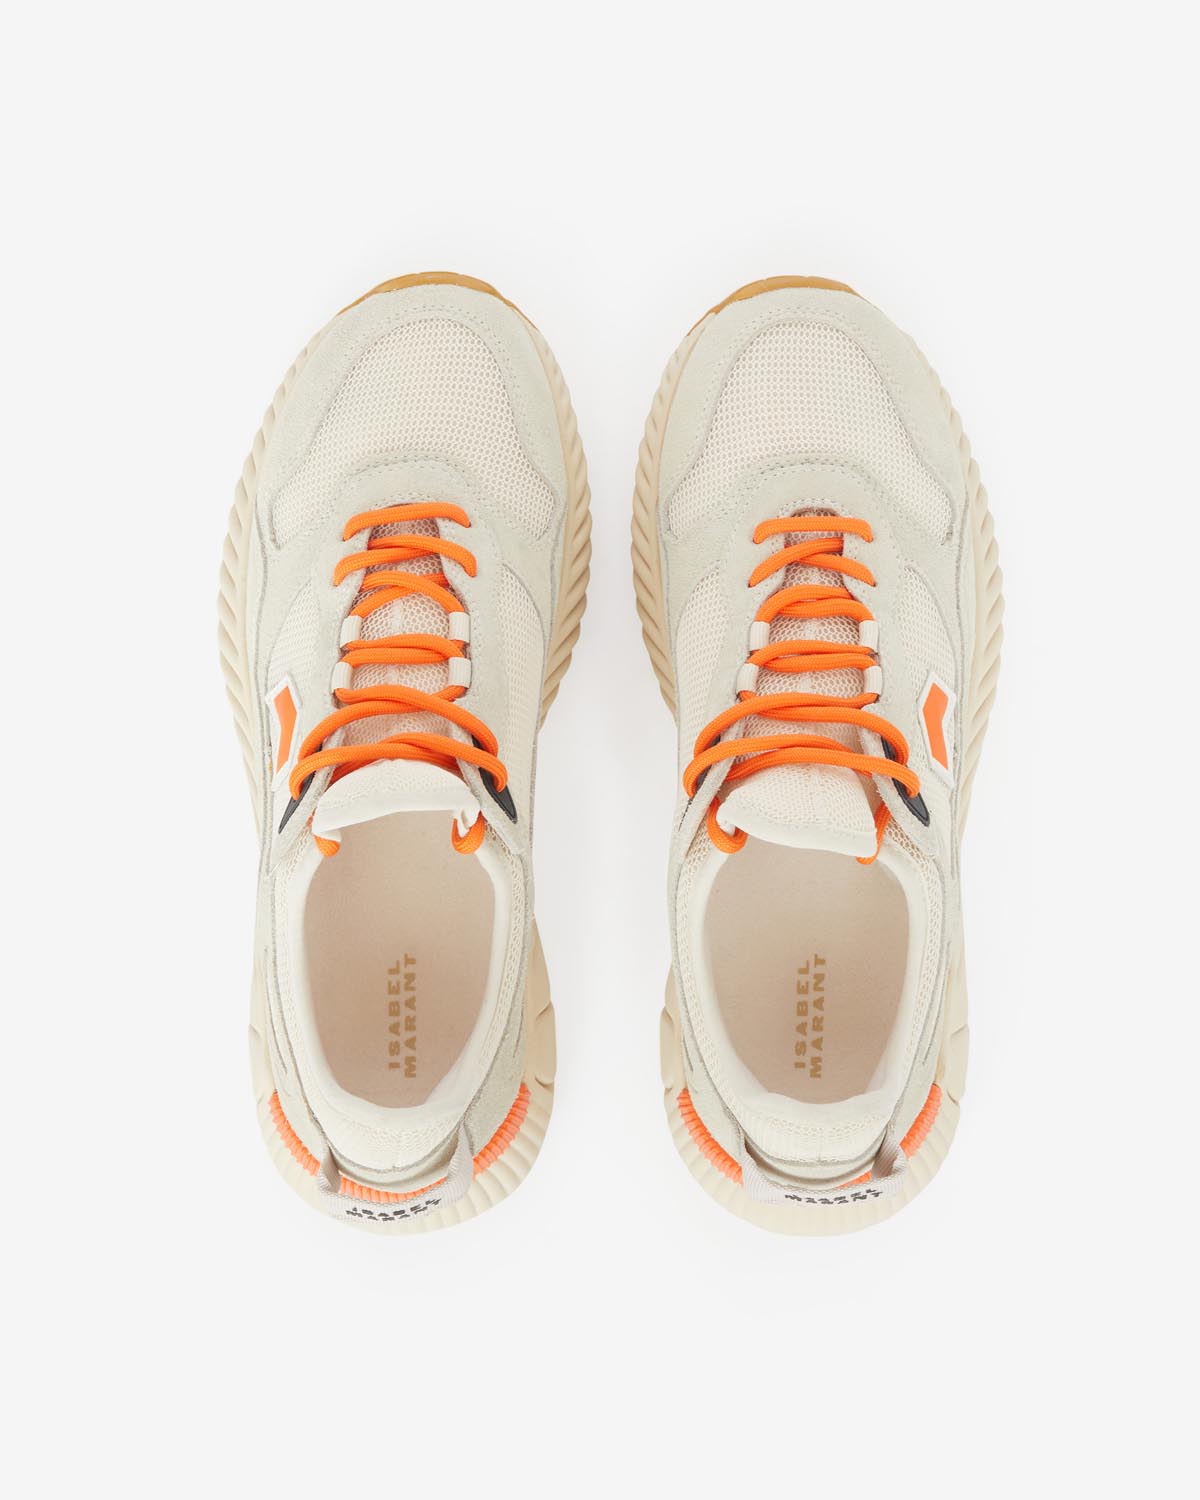 Ewie sneakers Man Ecru-orange 1